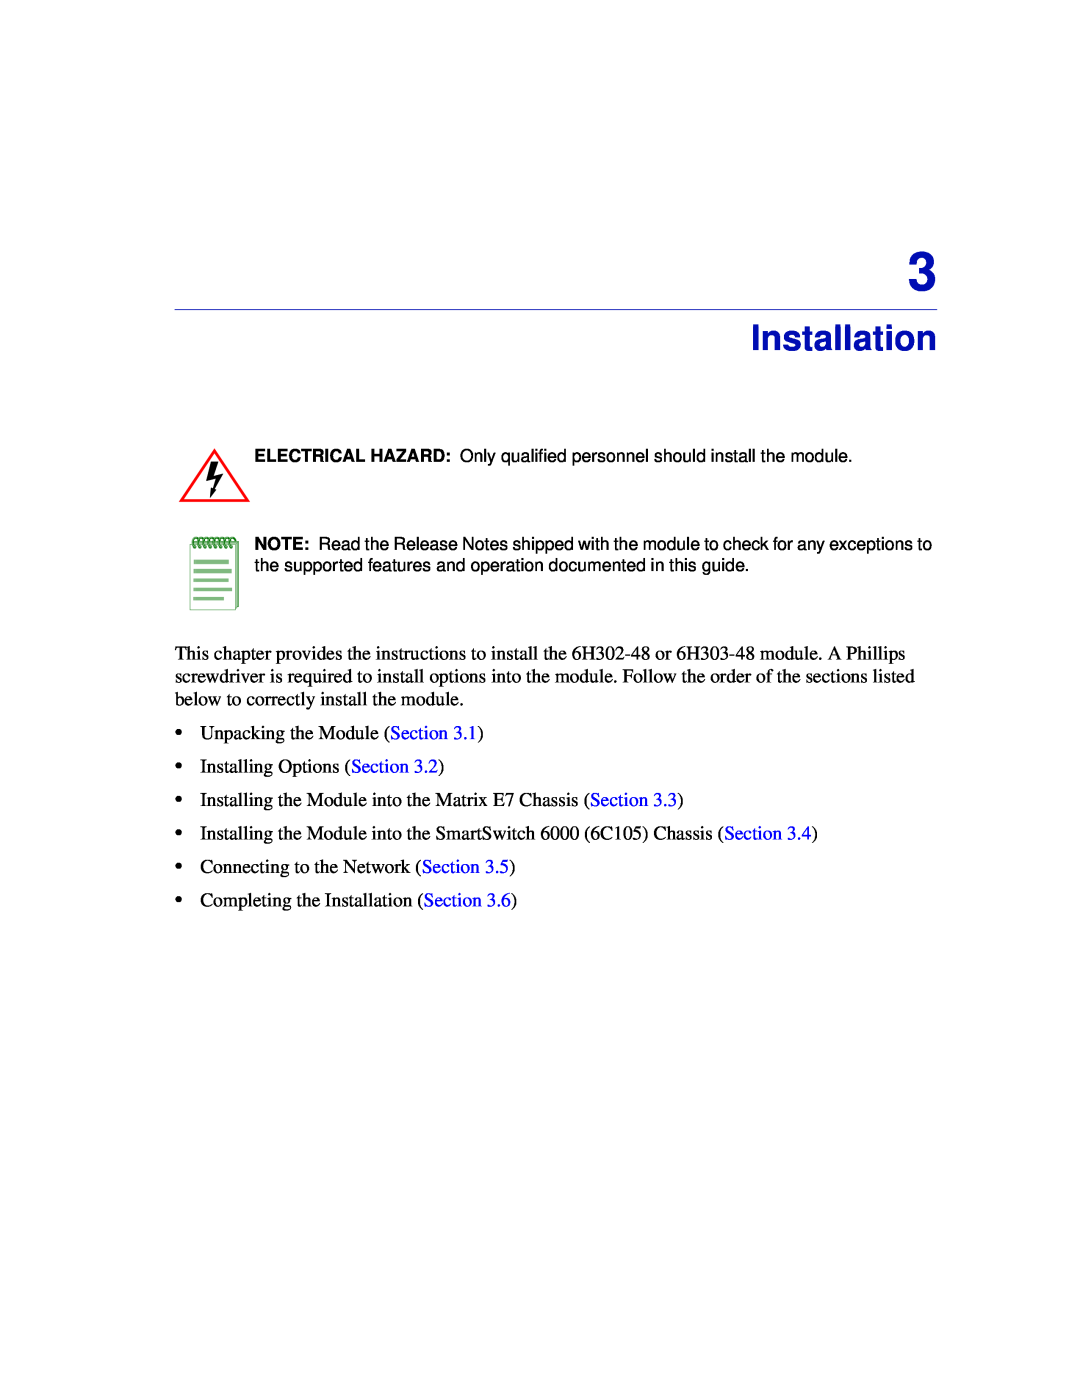 Enterasys Networks 6H302-48 manual Installation 